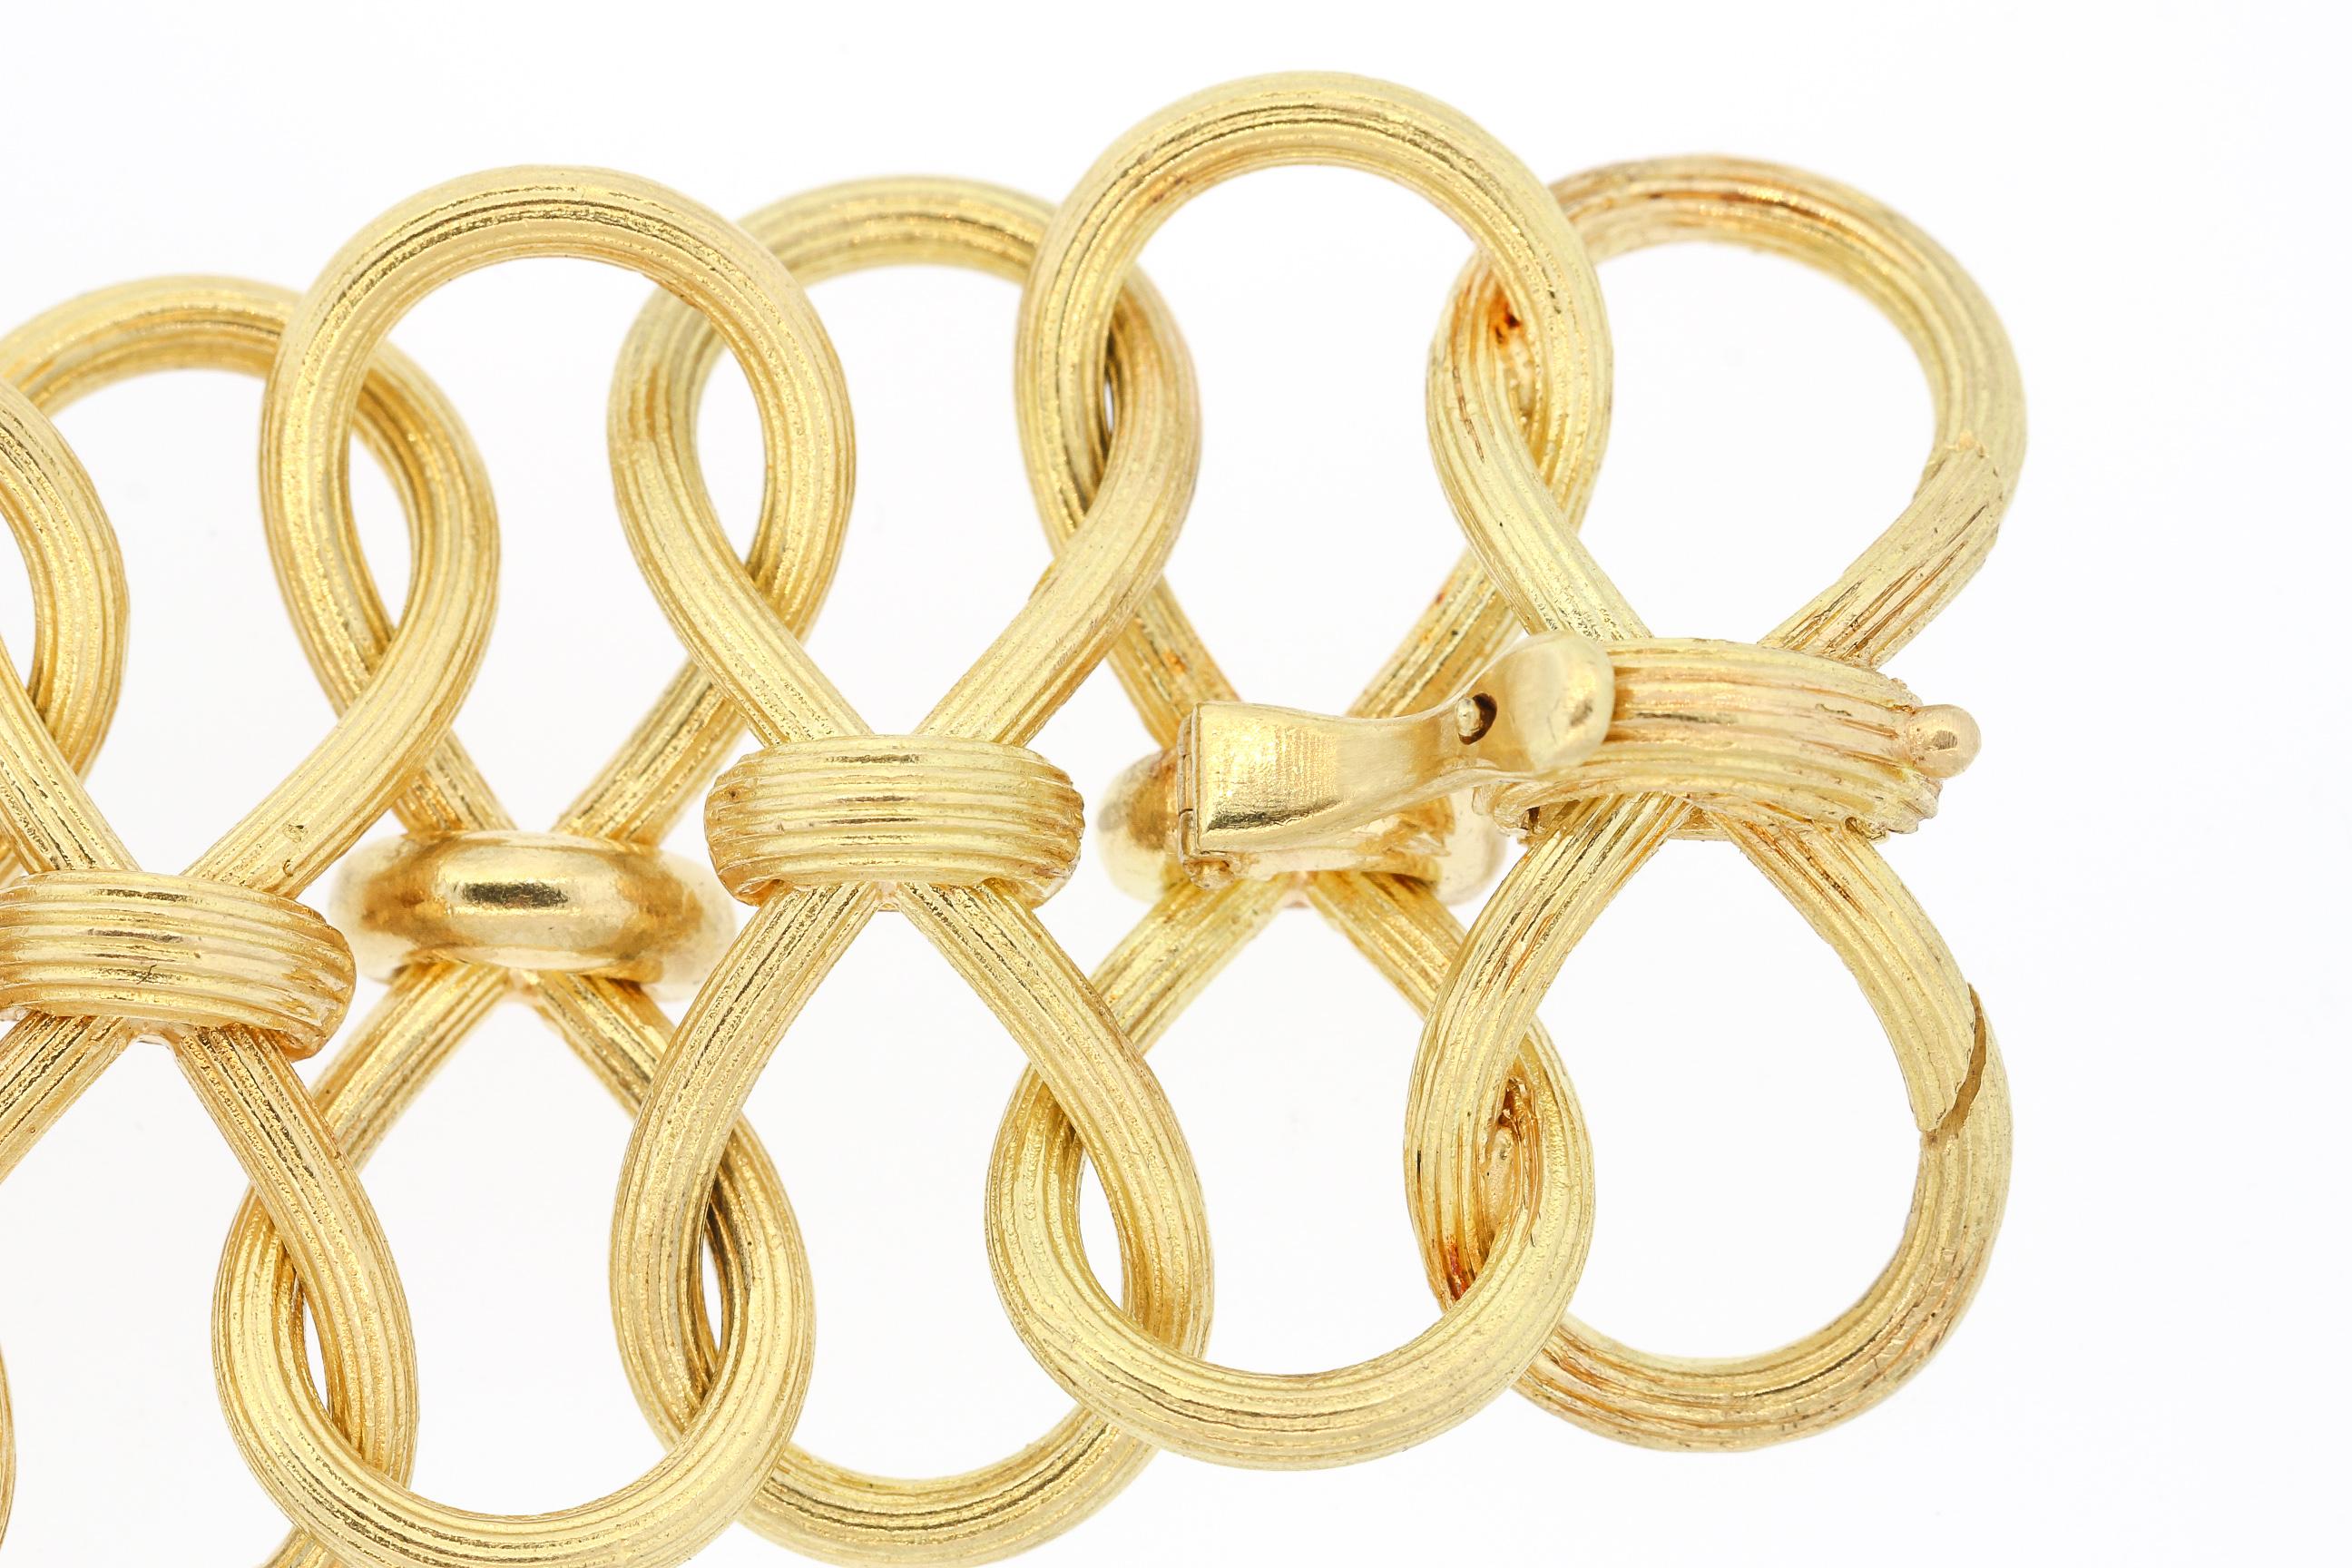 Rare Vintage 18 Karat Gold Open Link Bracelet by Schlumberger for Tiffany & Co. 2